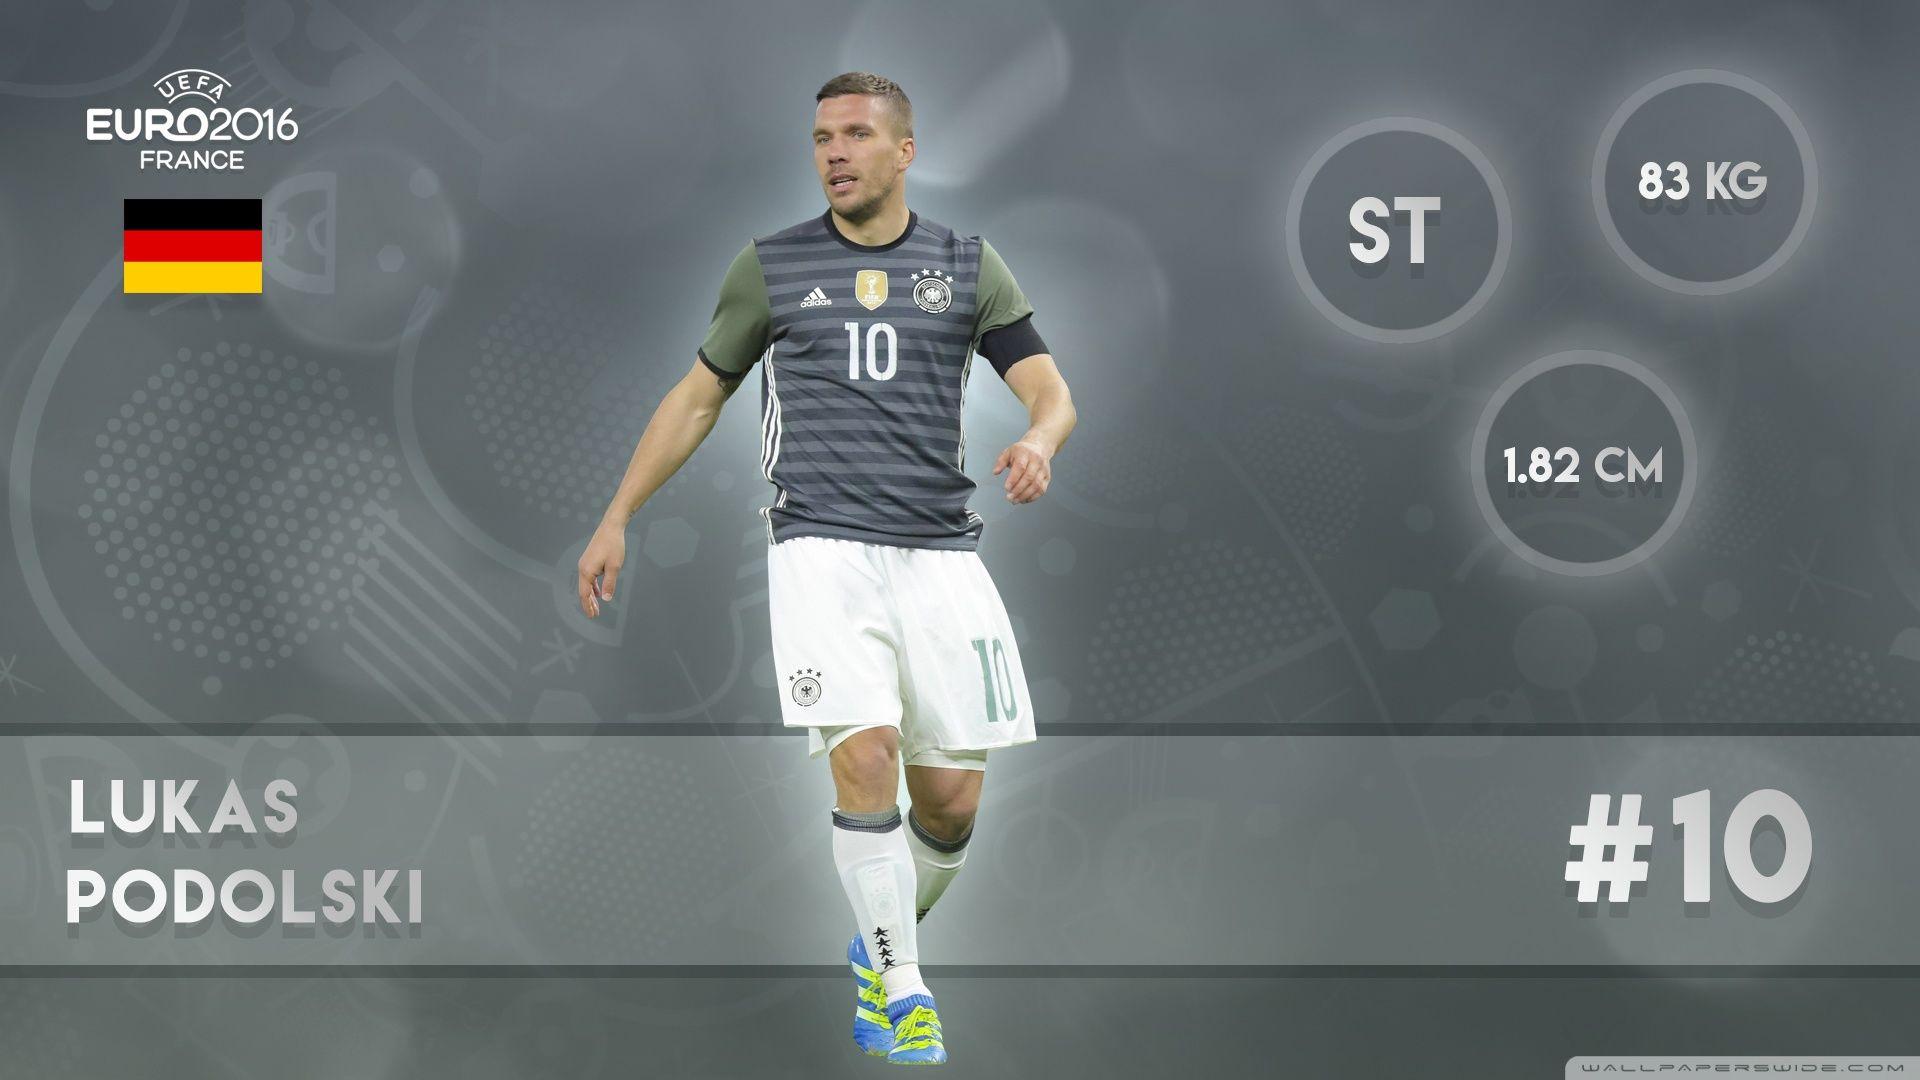 Euro 2016 Podolski HD desktop wallpaper, High Definition